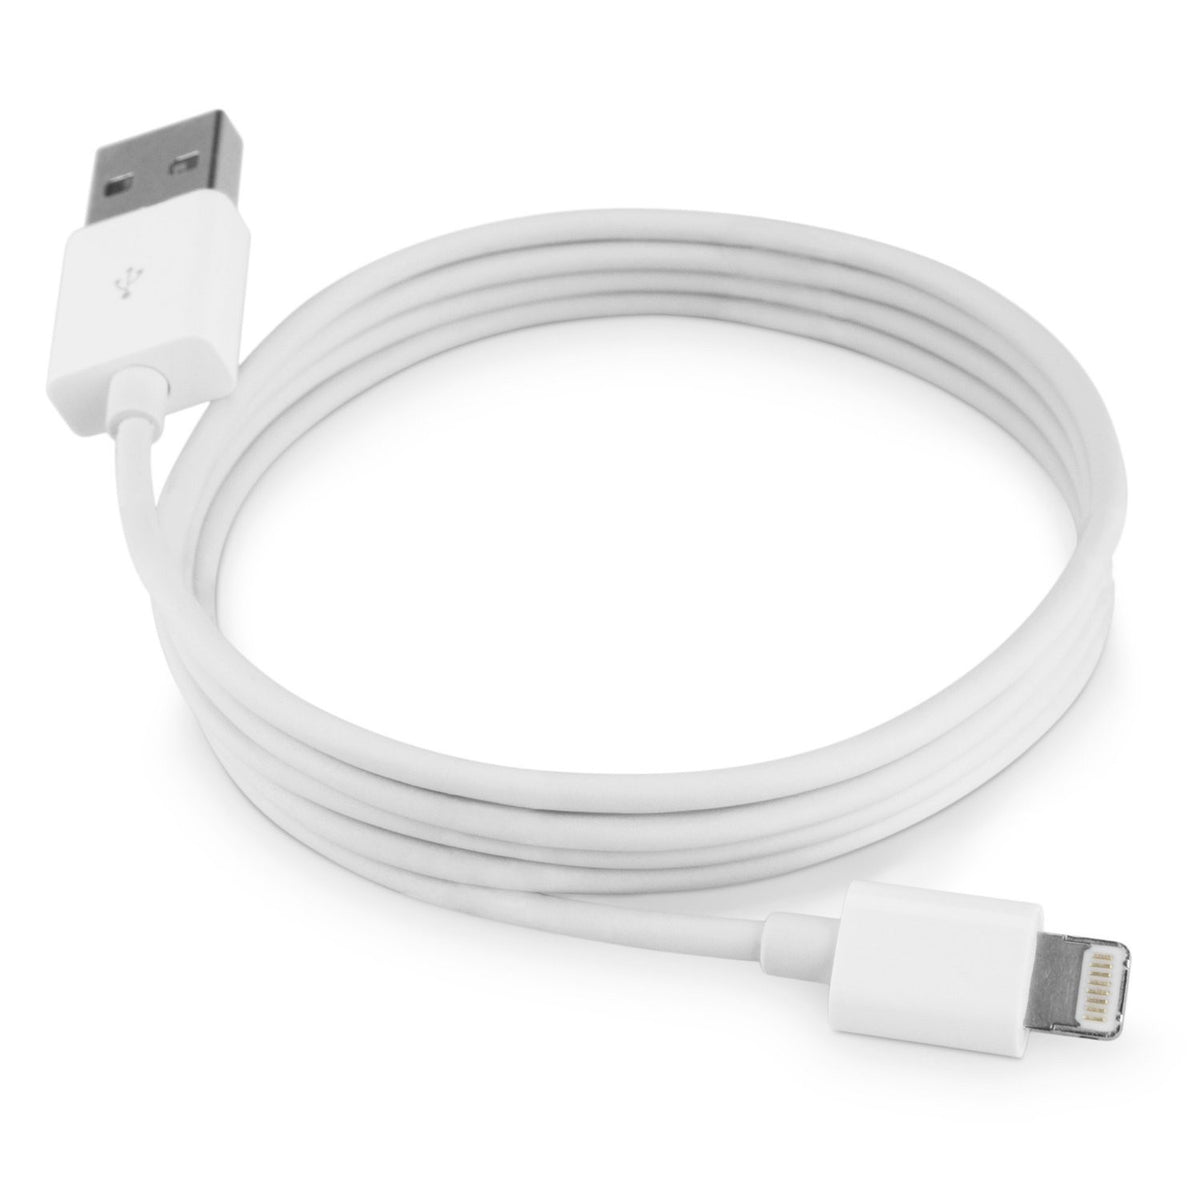 Cable de Lightning a USB